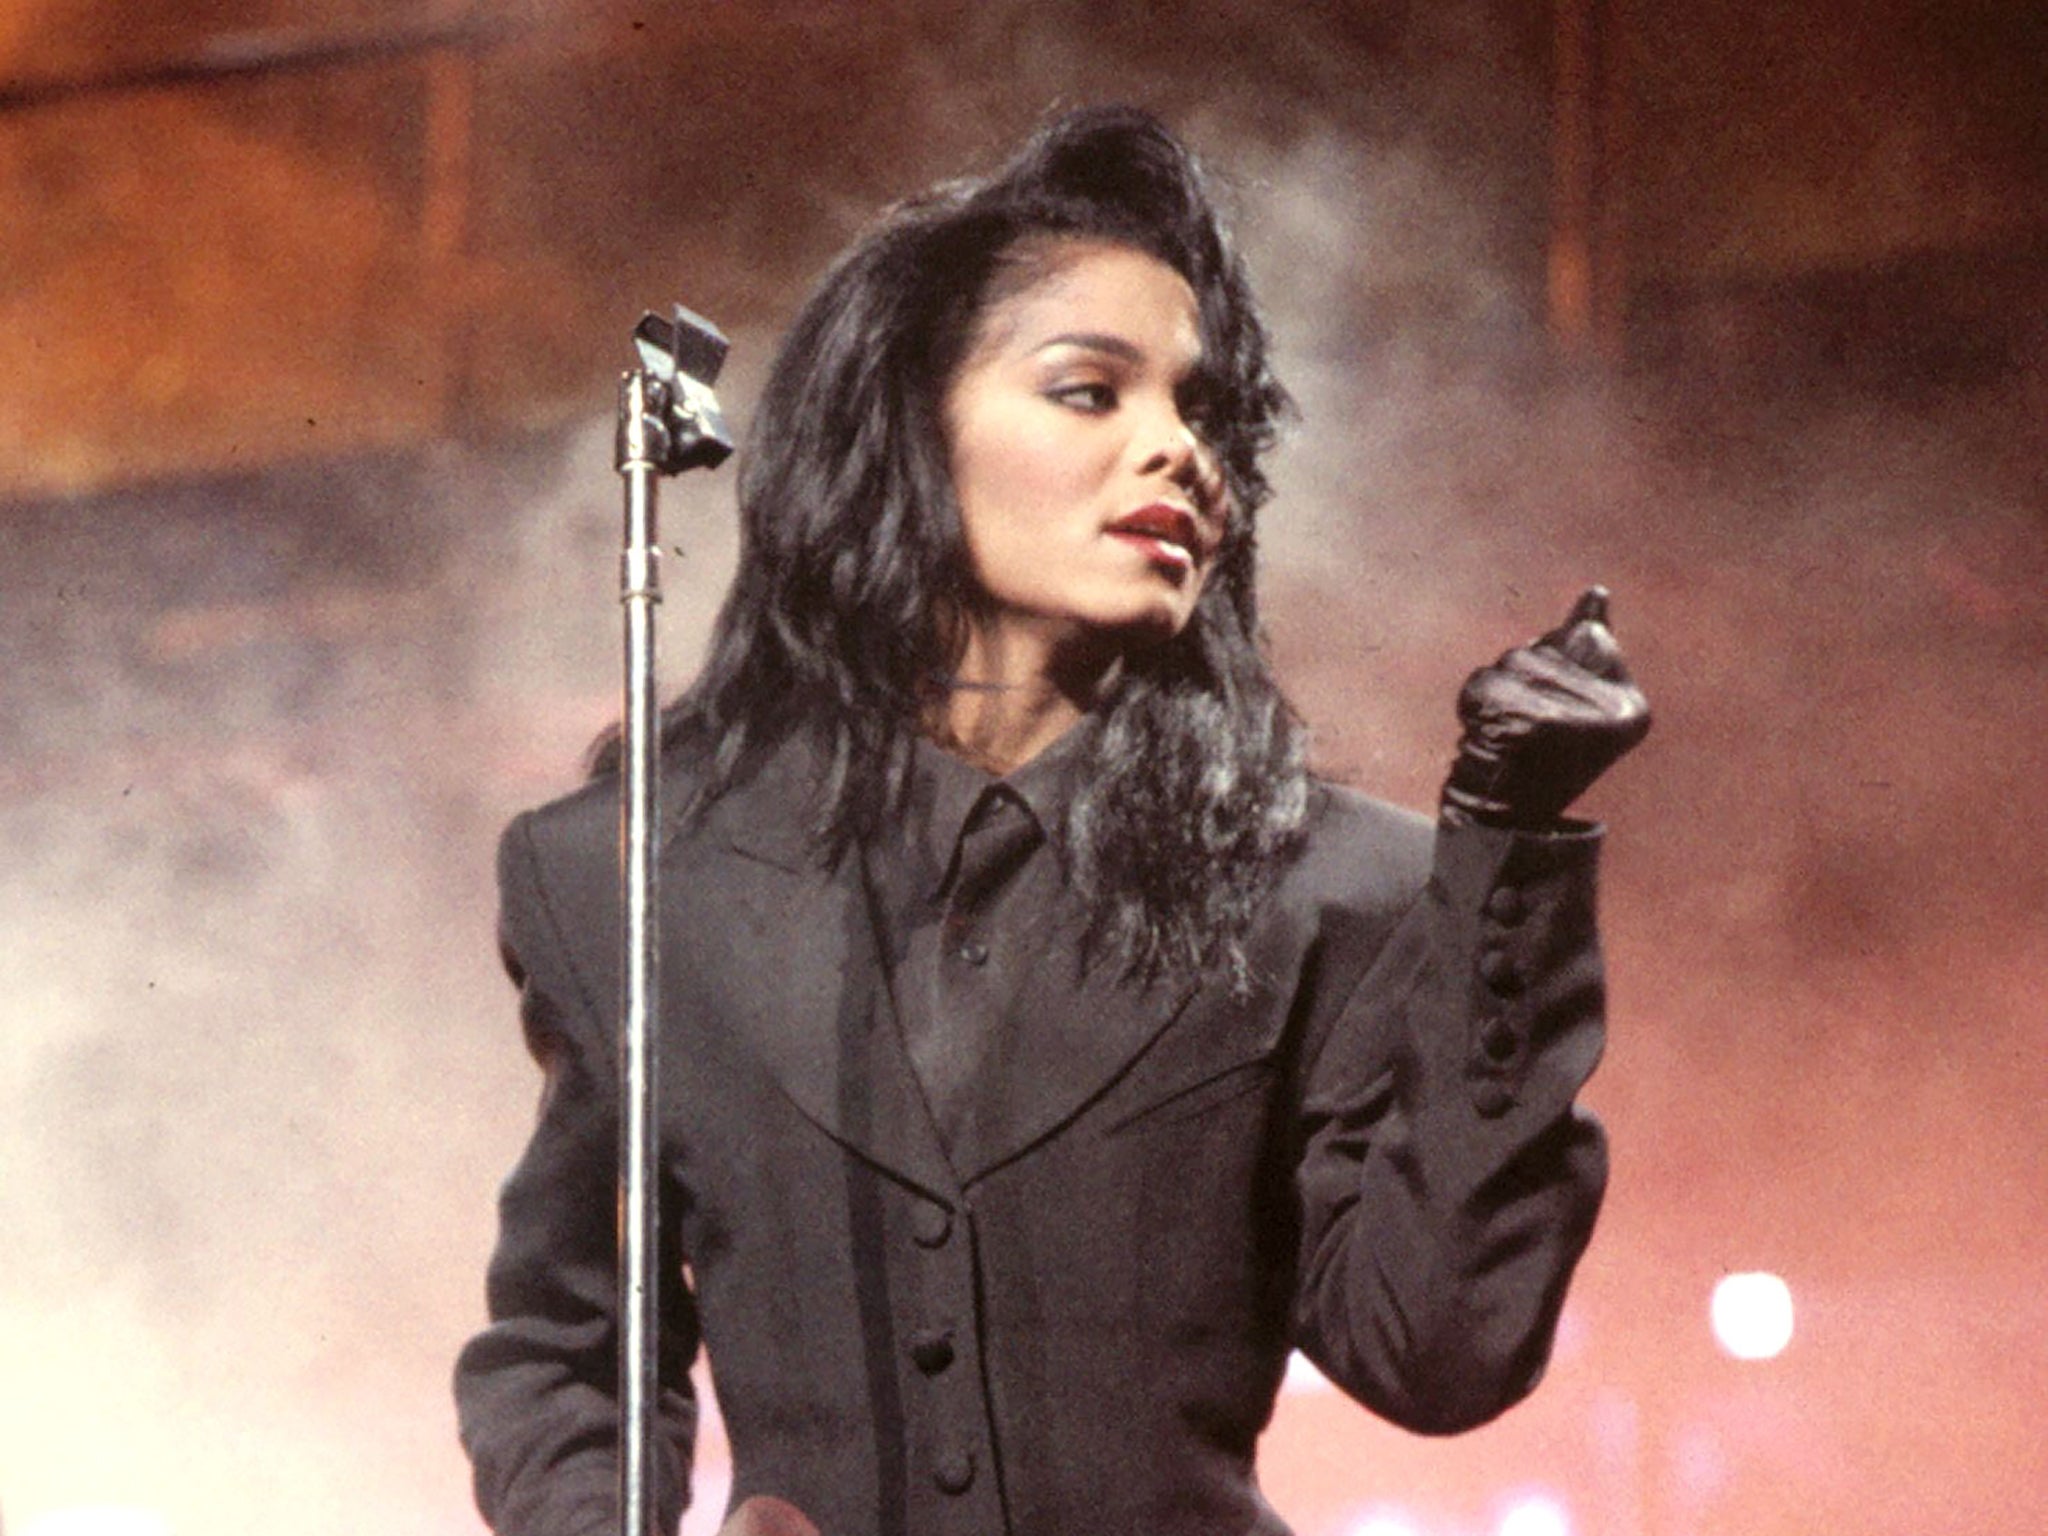 Janet Jackson in concert in 1991